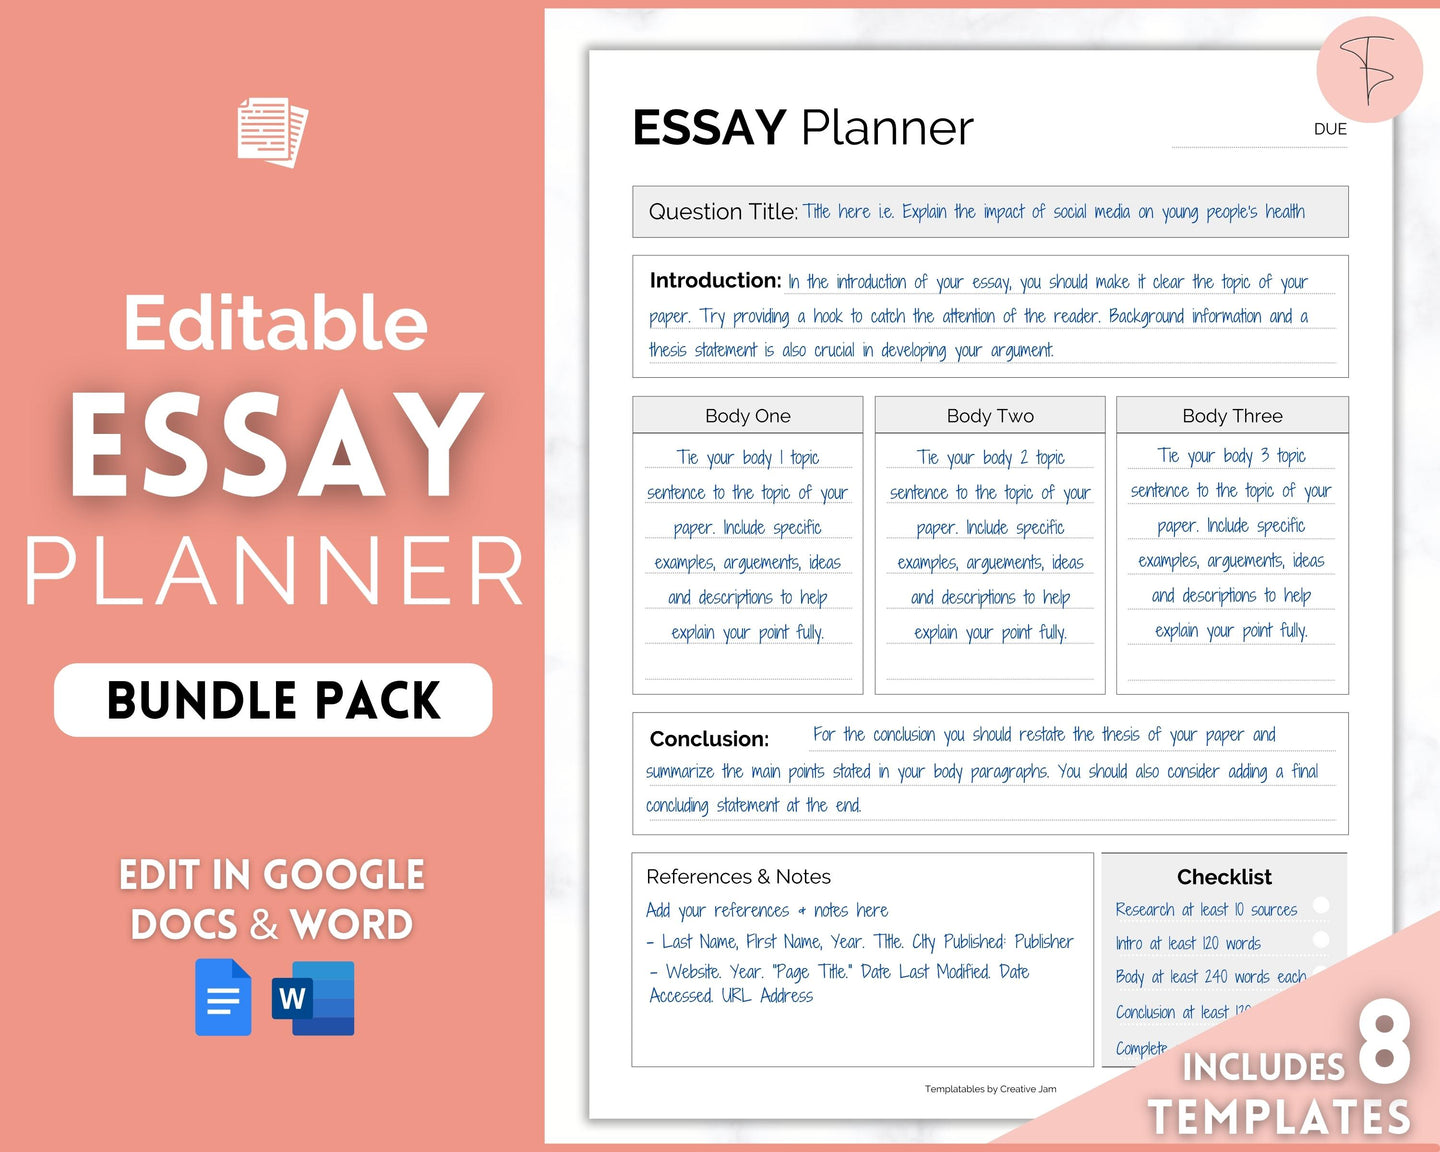 EDITABLE Essay Planner bundle | Student Essay Writing Template, College Assignment, School Homework, Academic Project Plan , Google Docs, Word | Minimalist